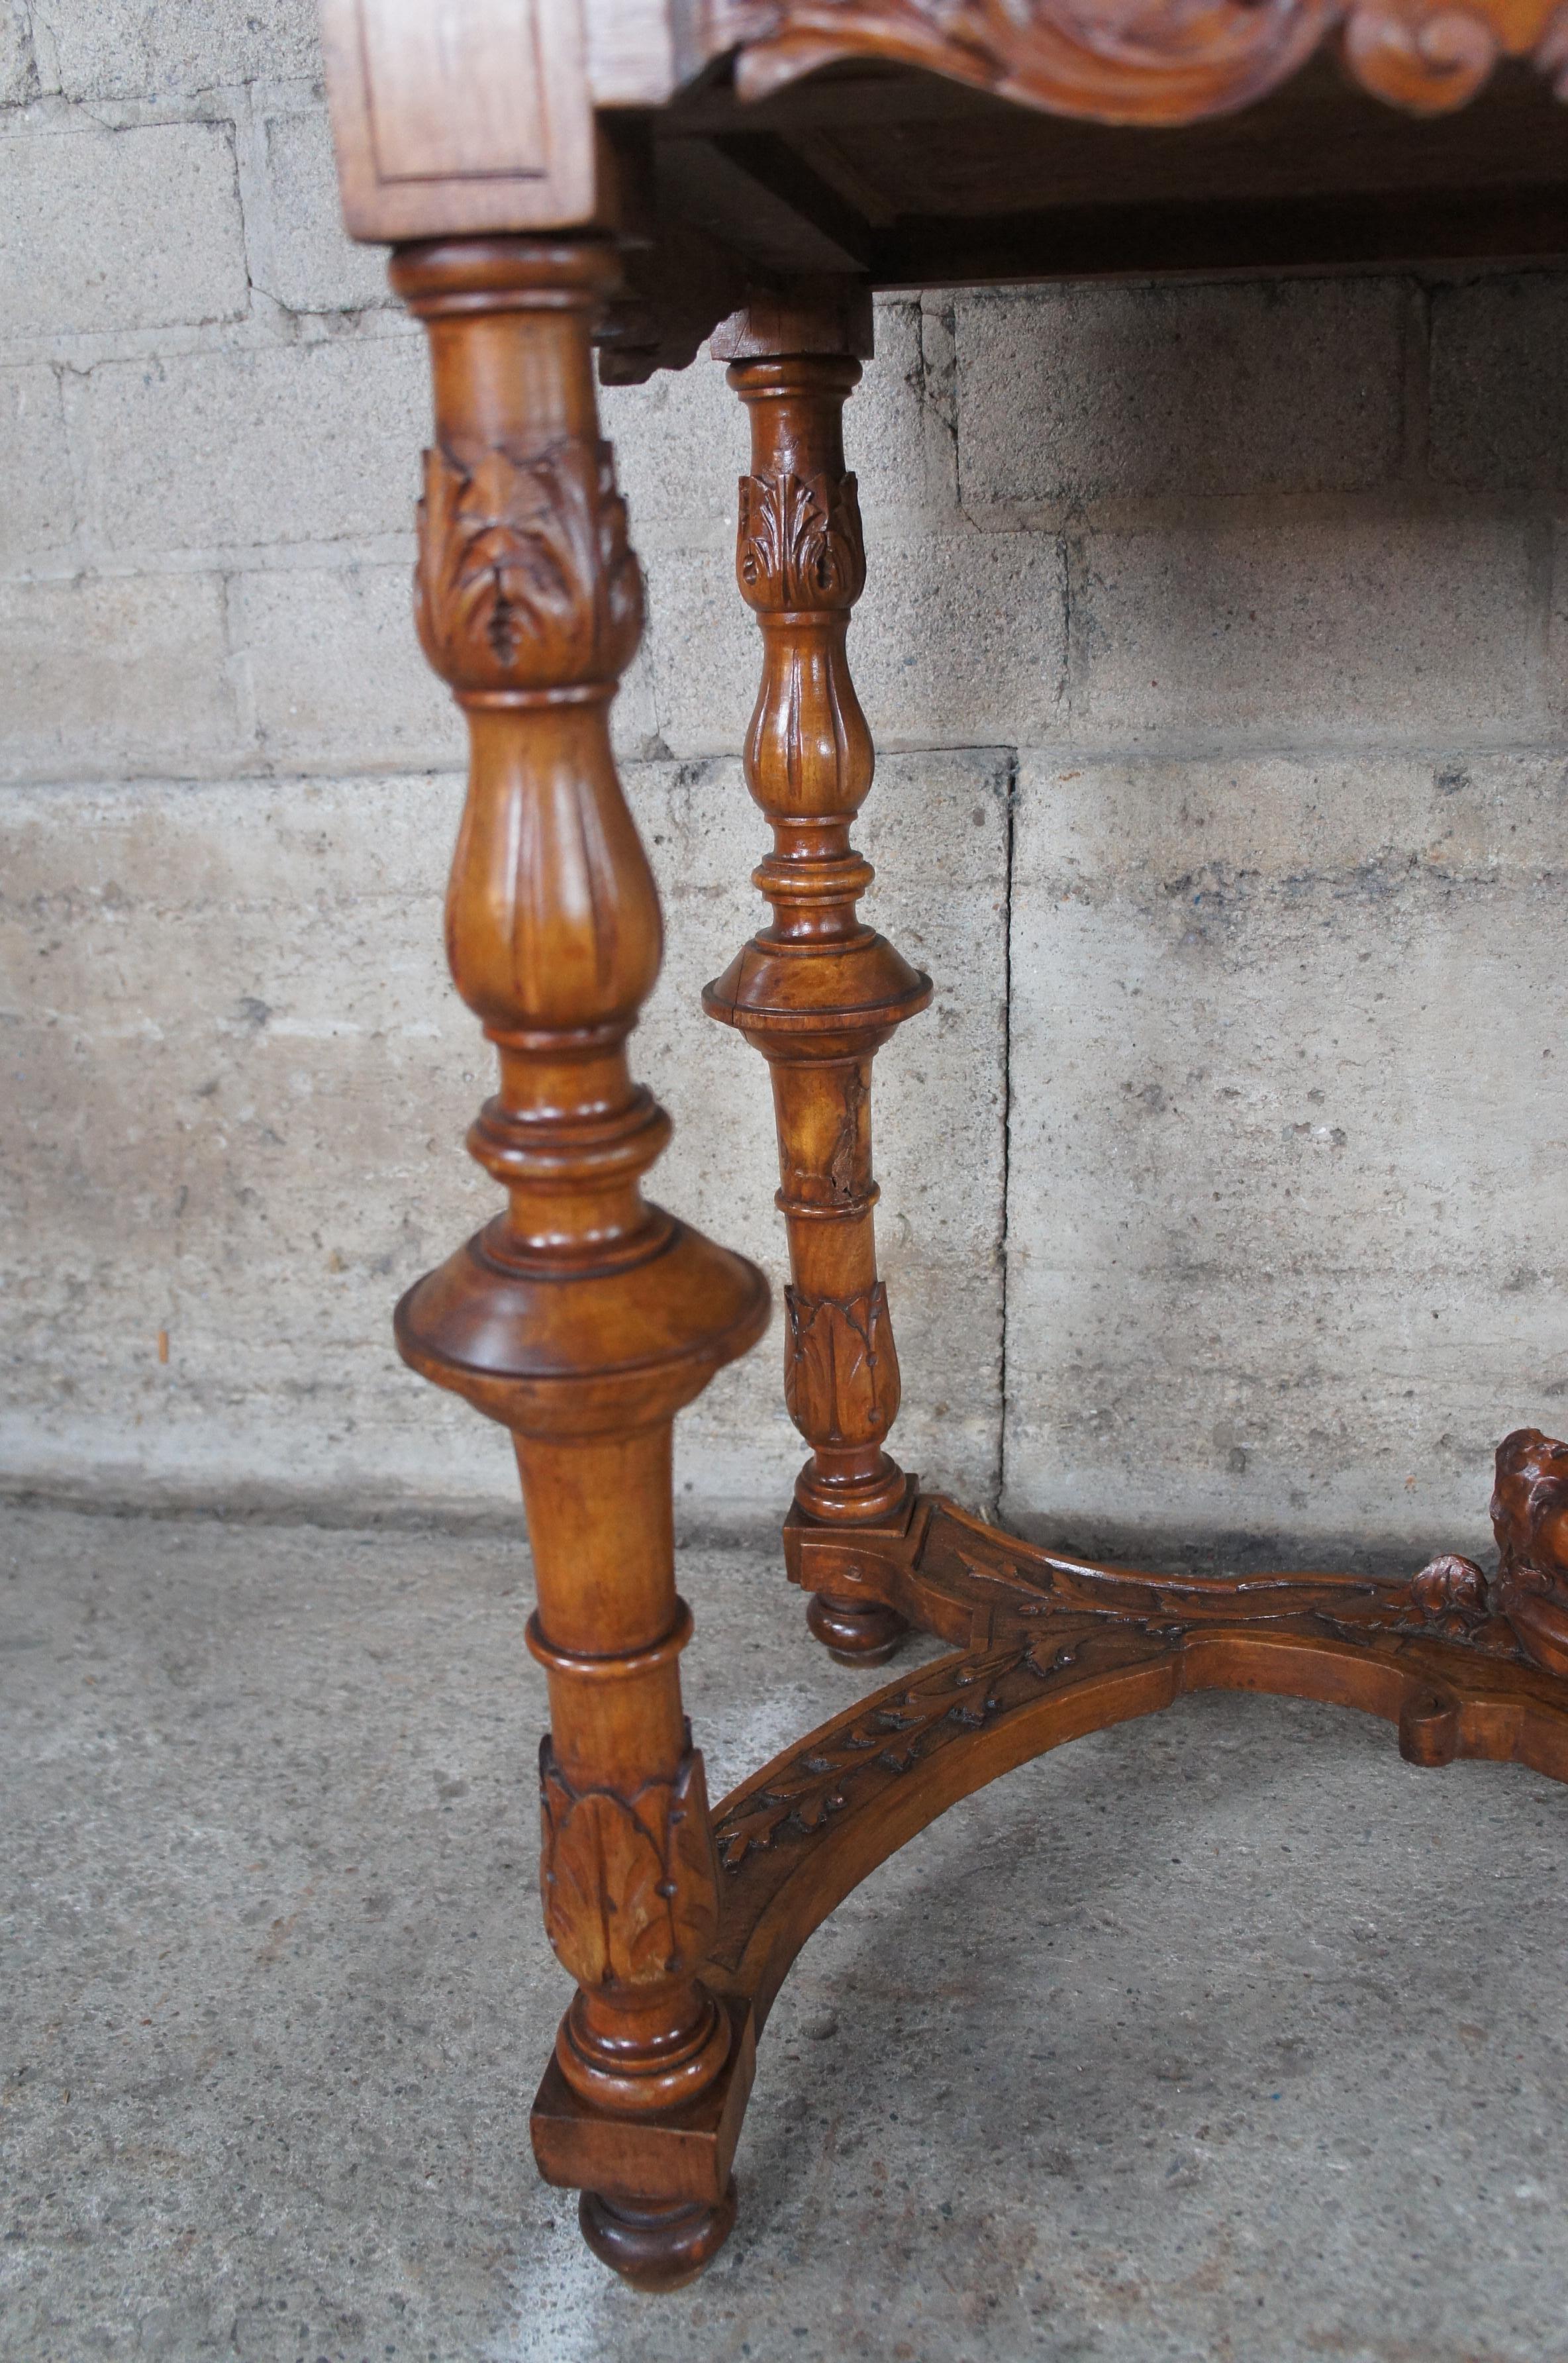 Antique Italian Renaissance Revival Walnut Figural Carved Writing Desk 52